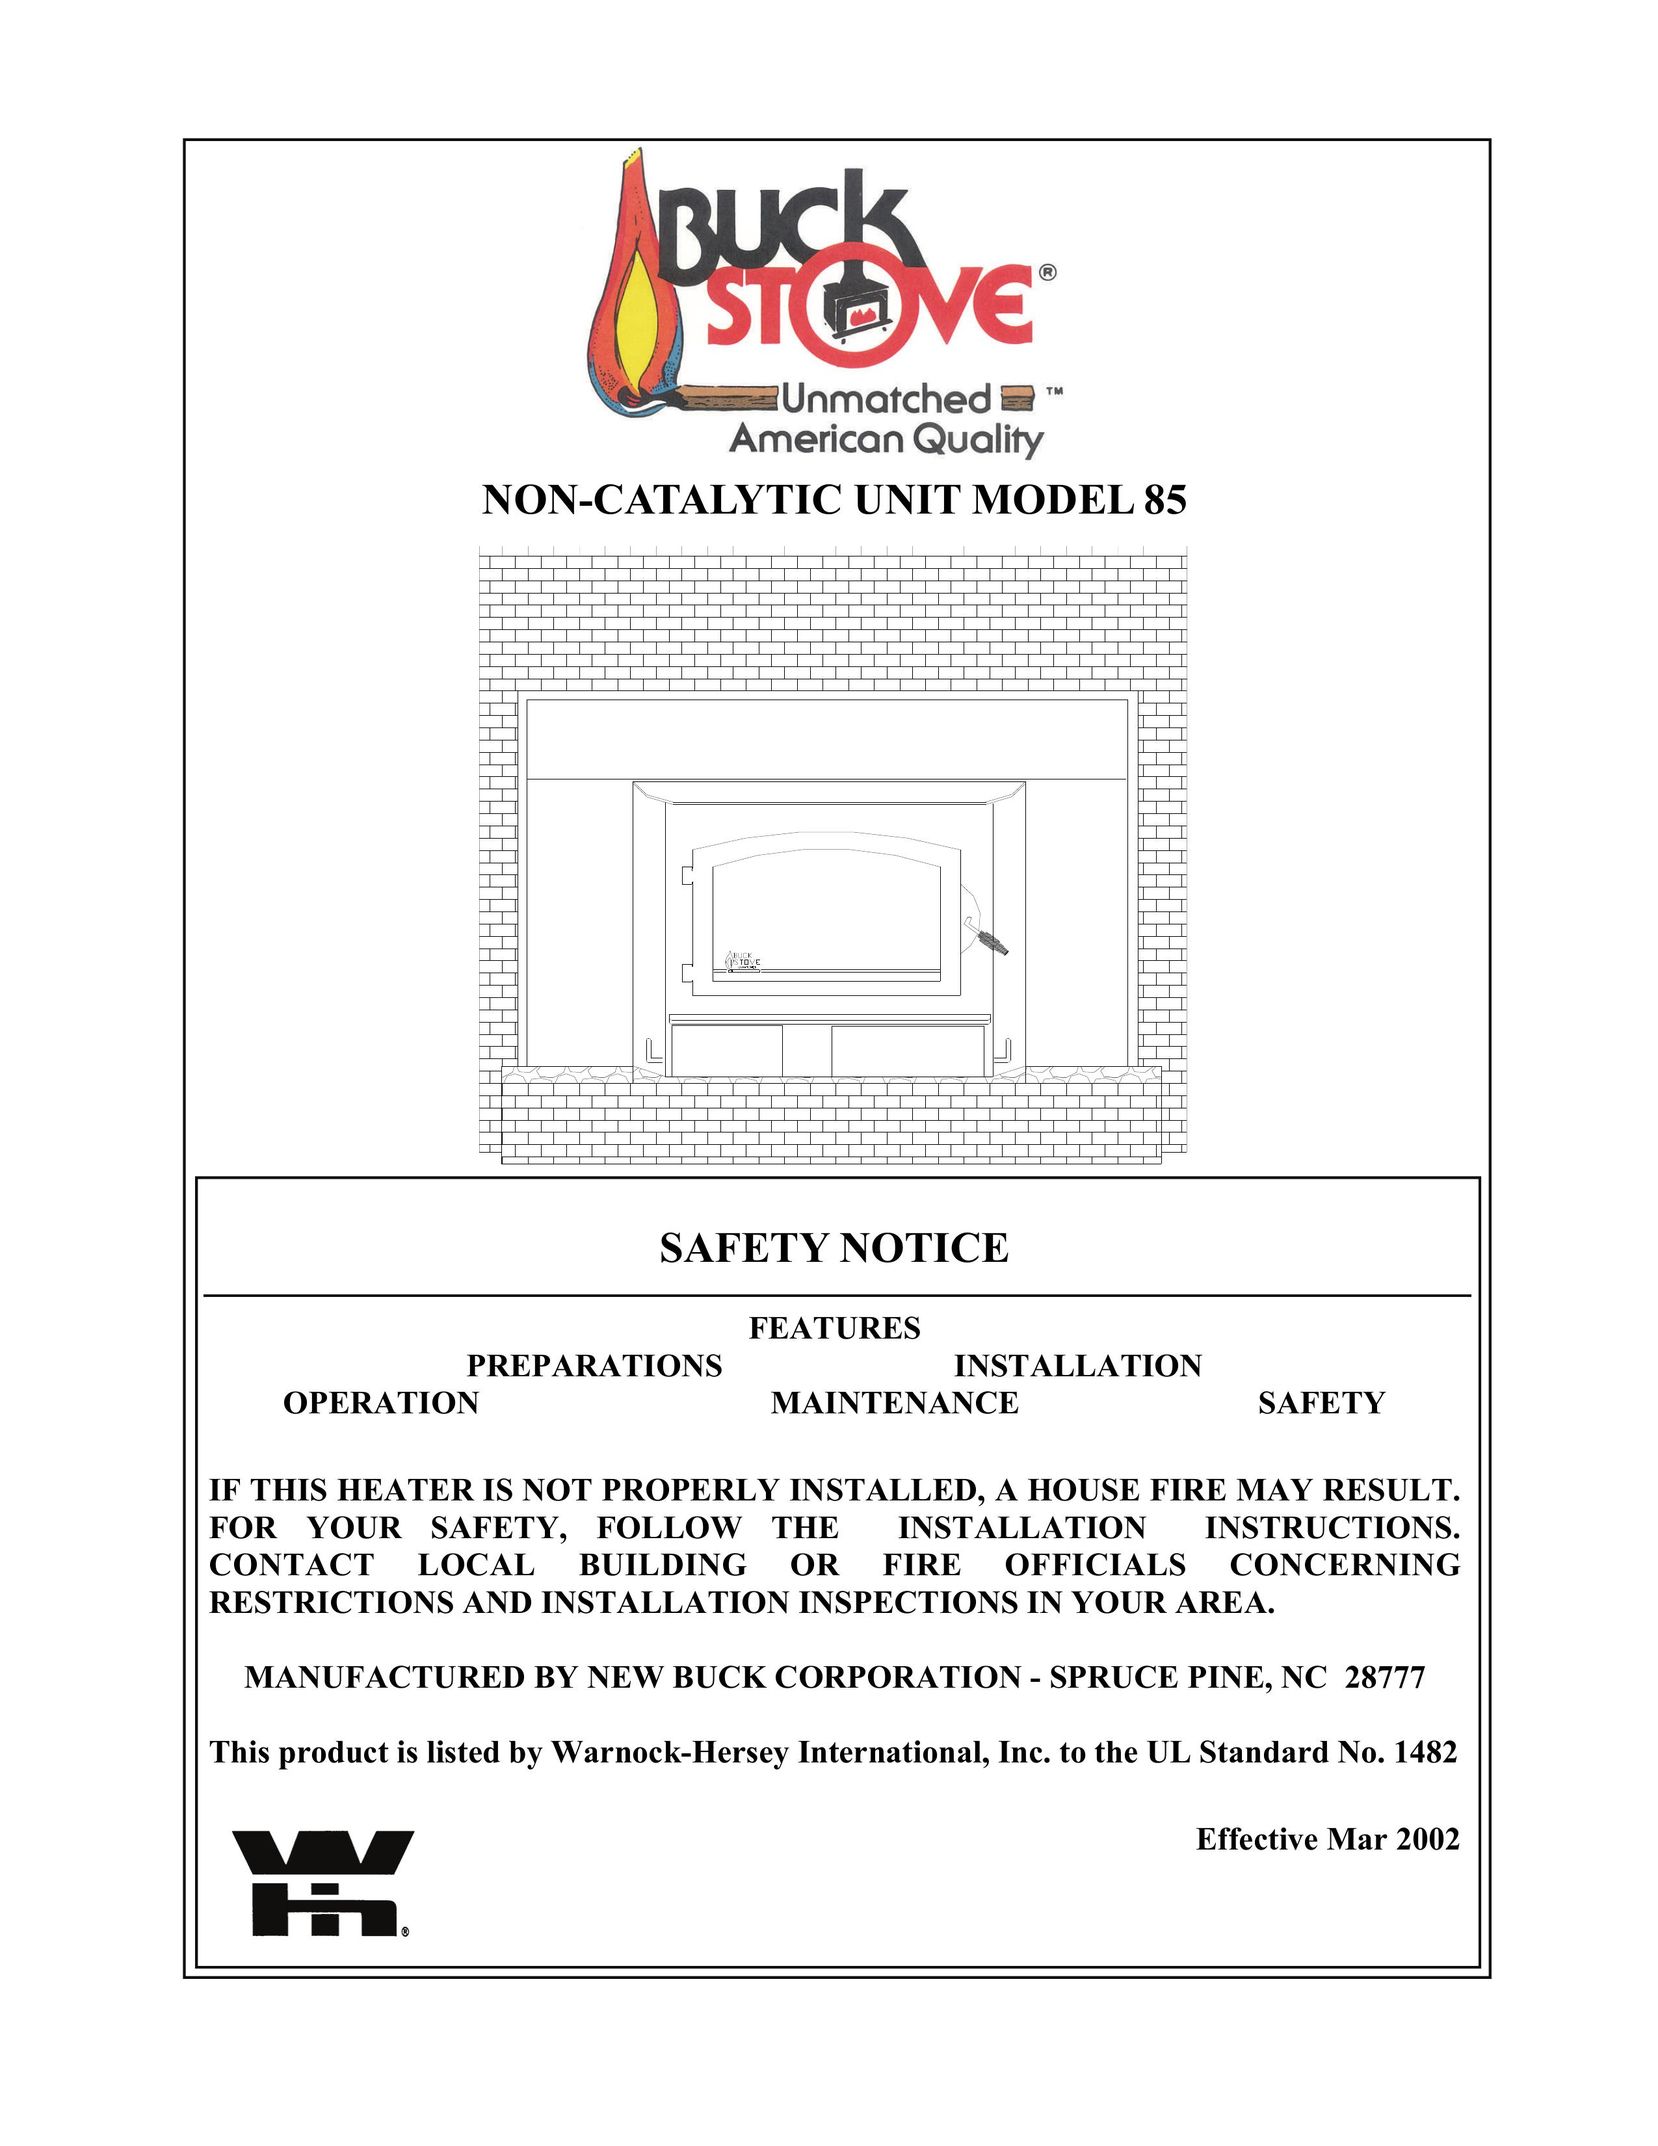 New Buck Corporation 85 Indoor Fireplace User Manual